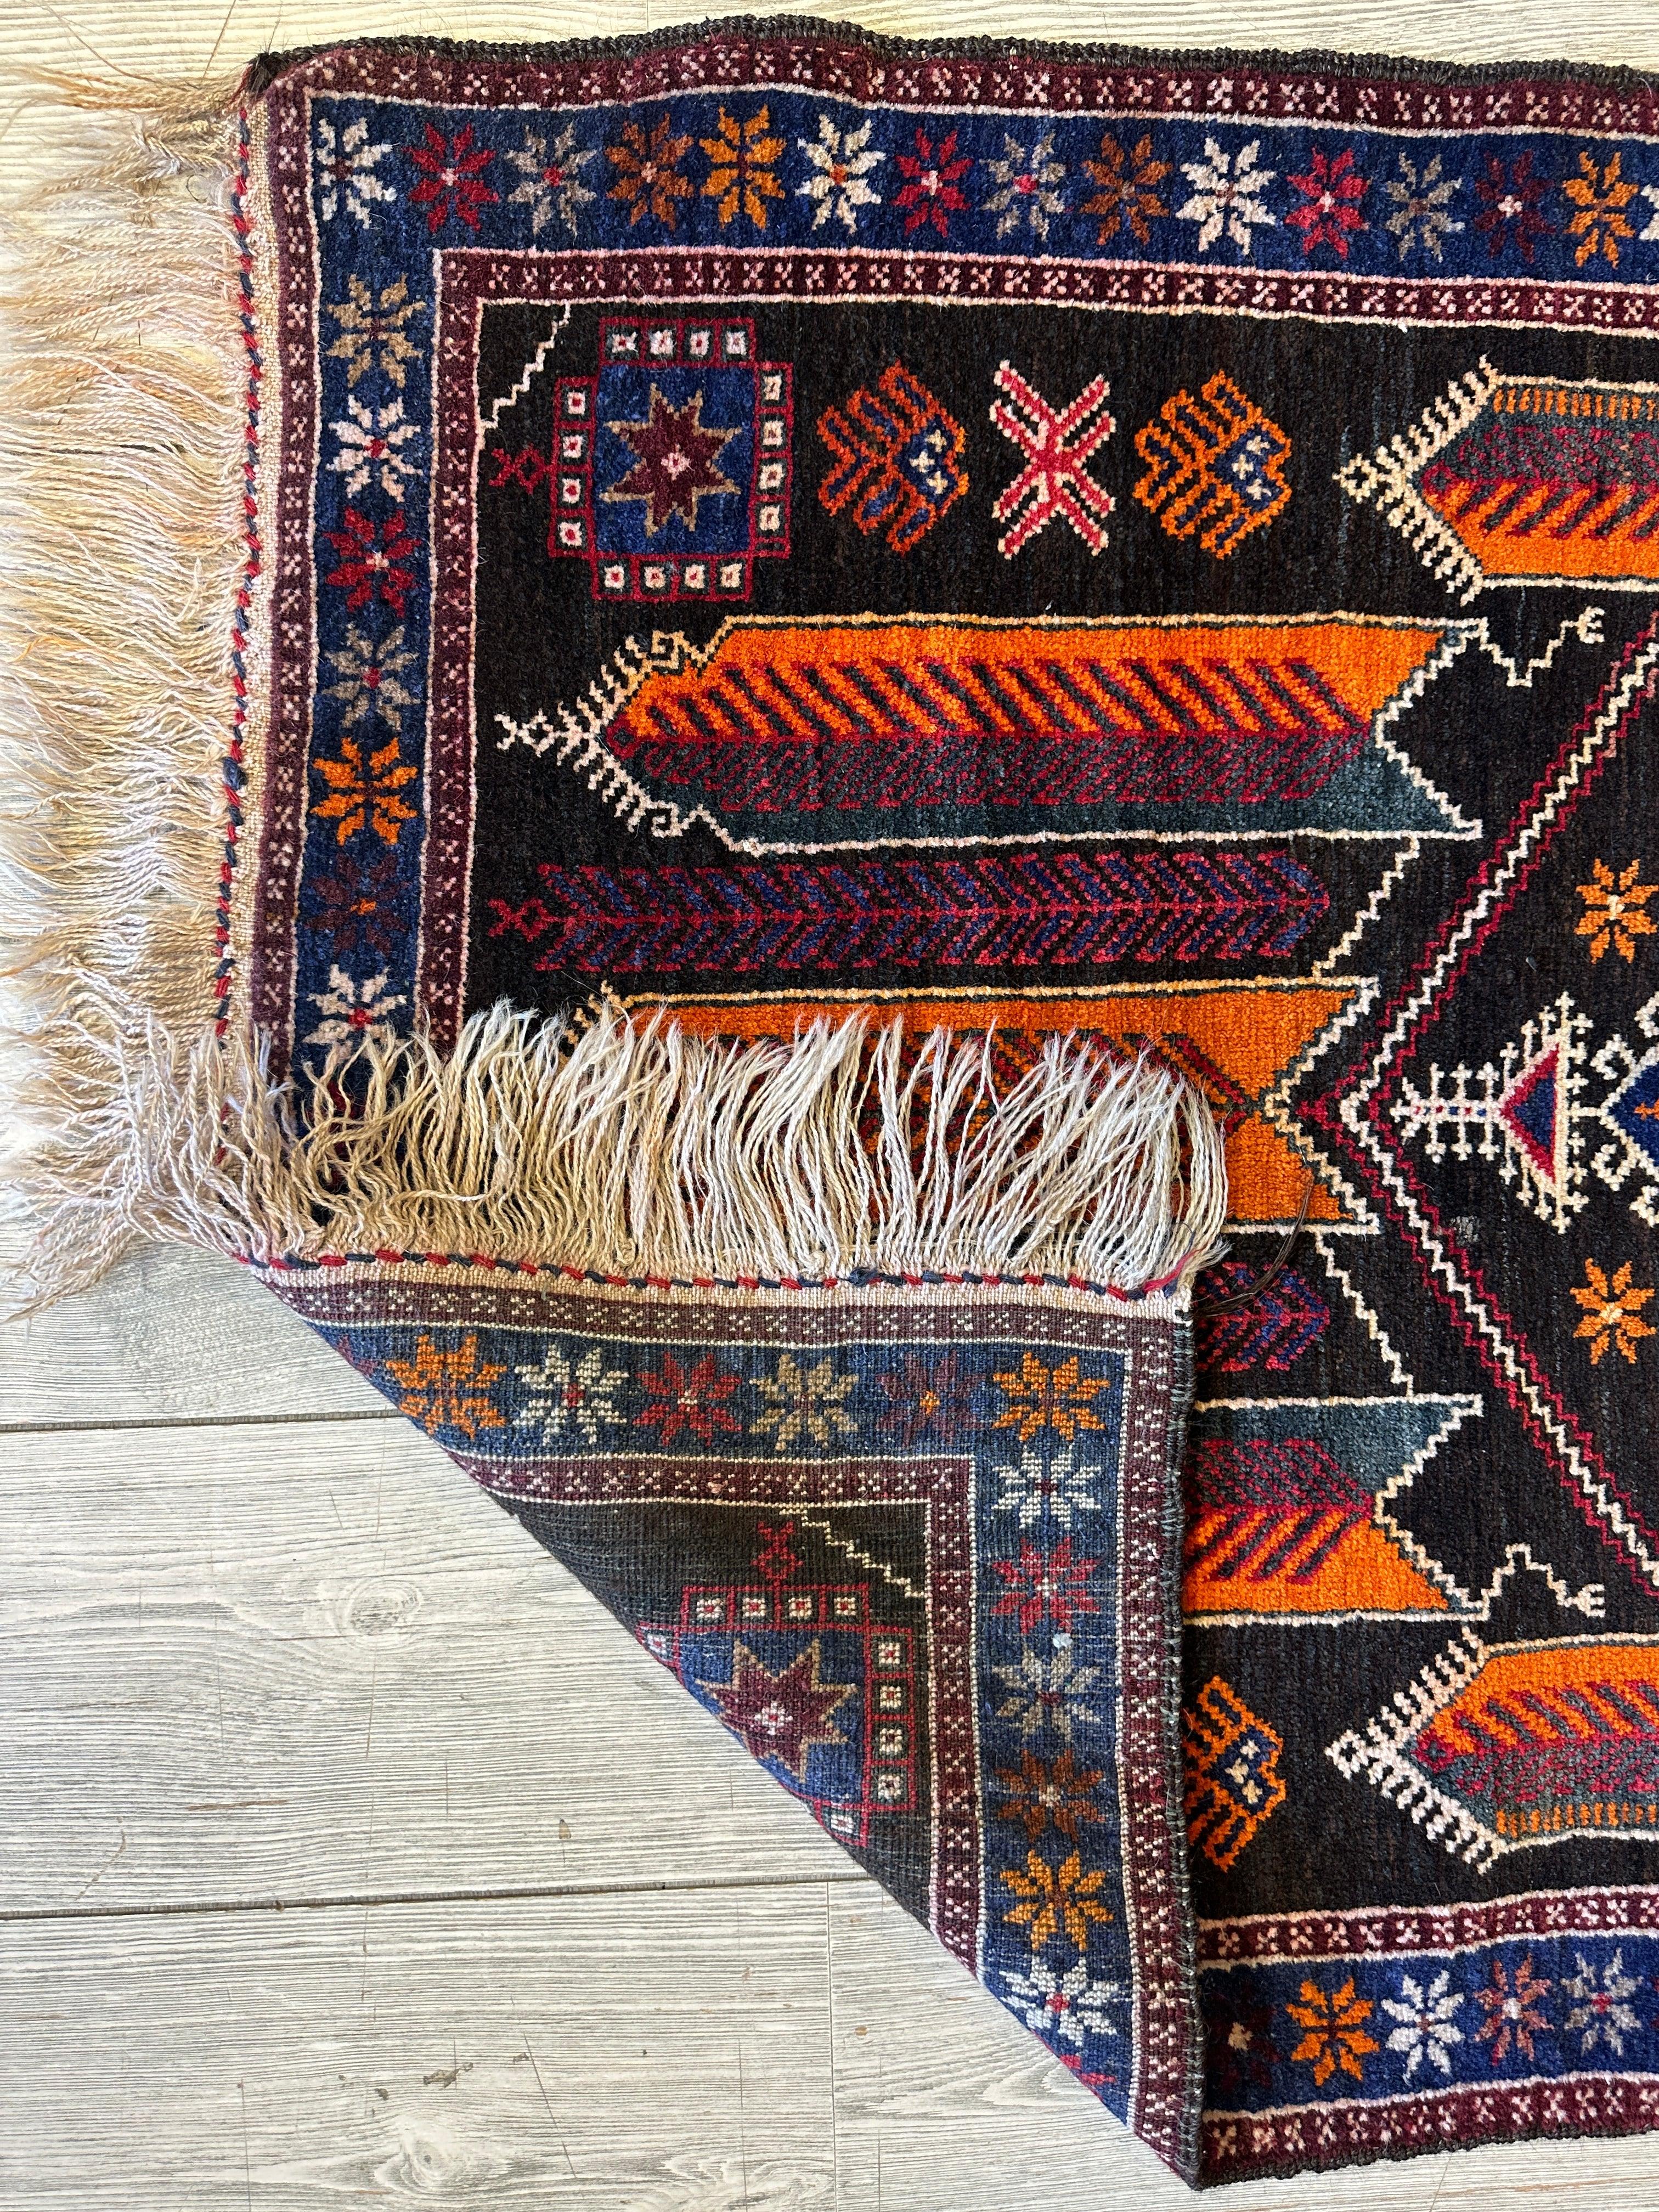 Beautiful Tribal Afghani Wool Prayer Rug 2’7” x 4’3”